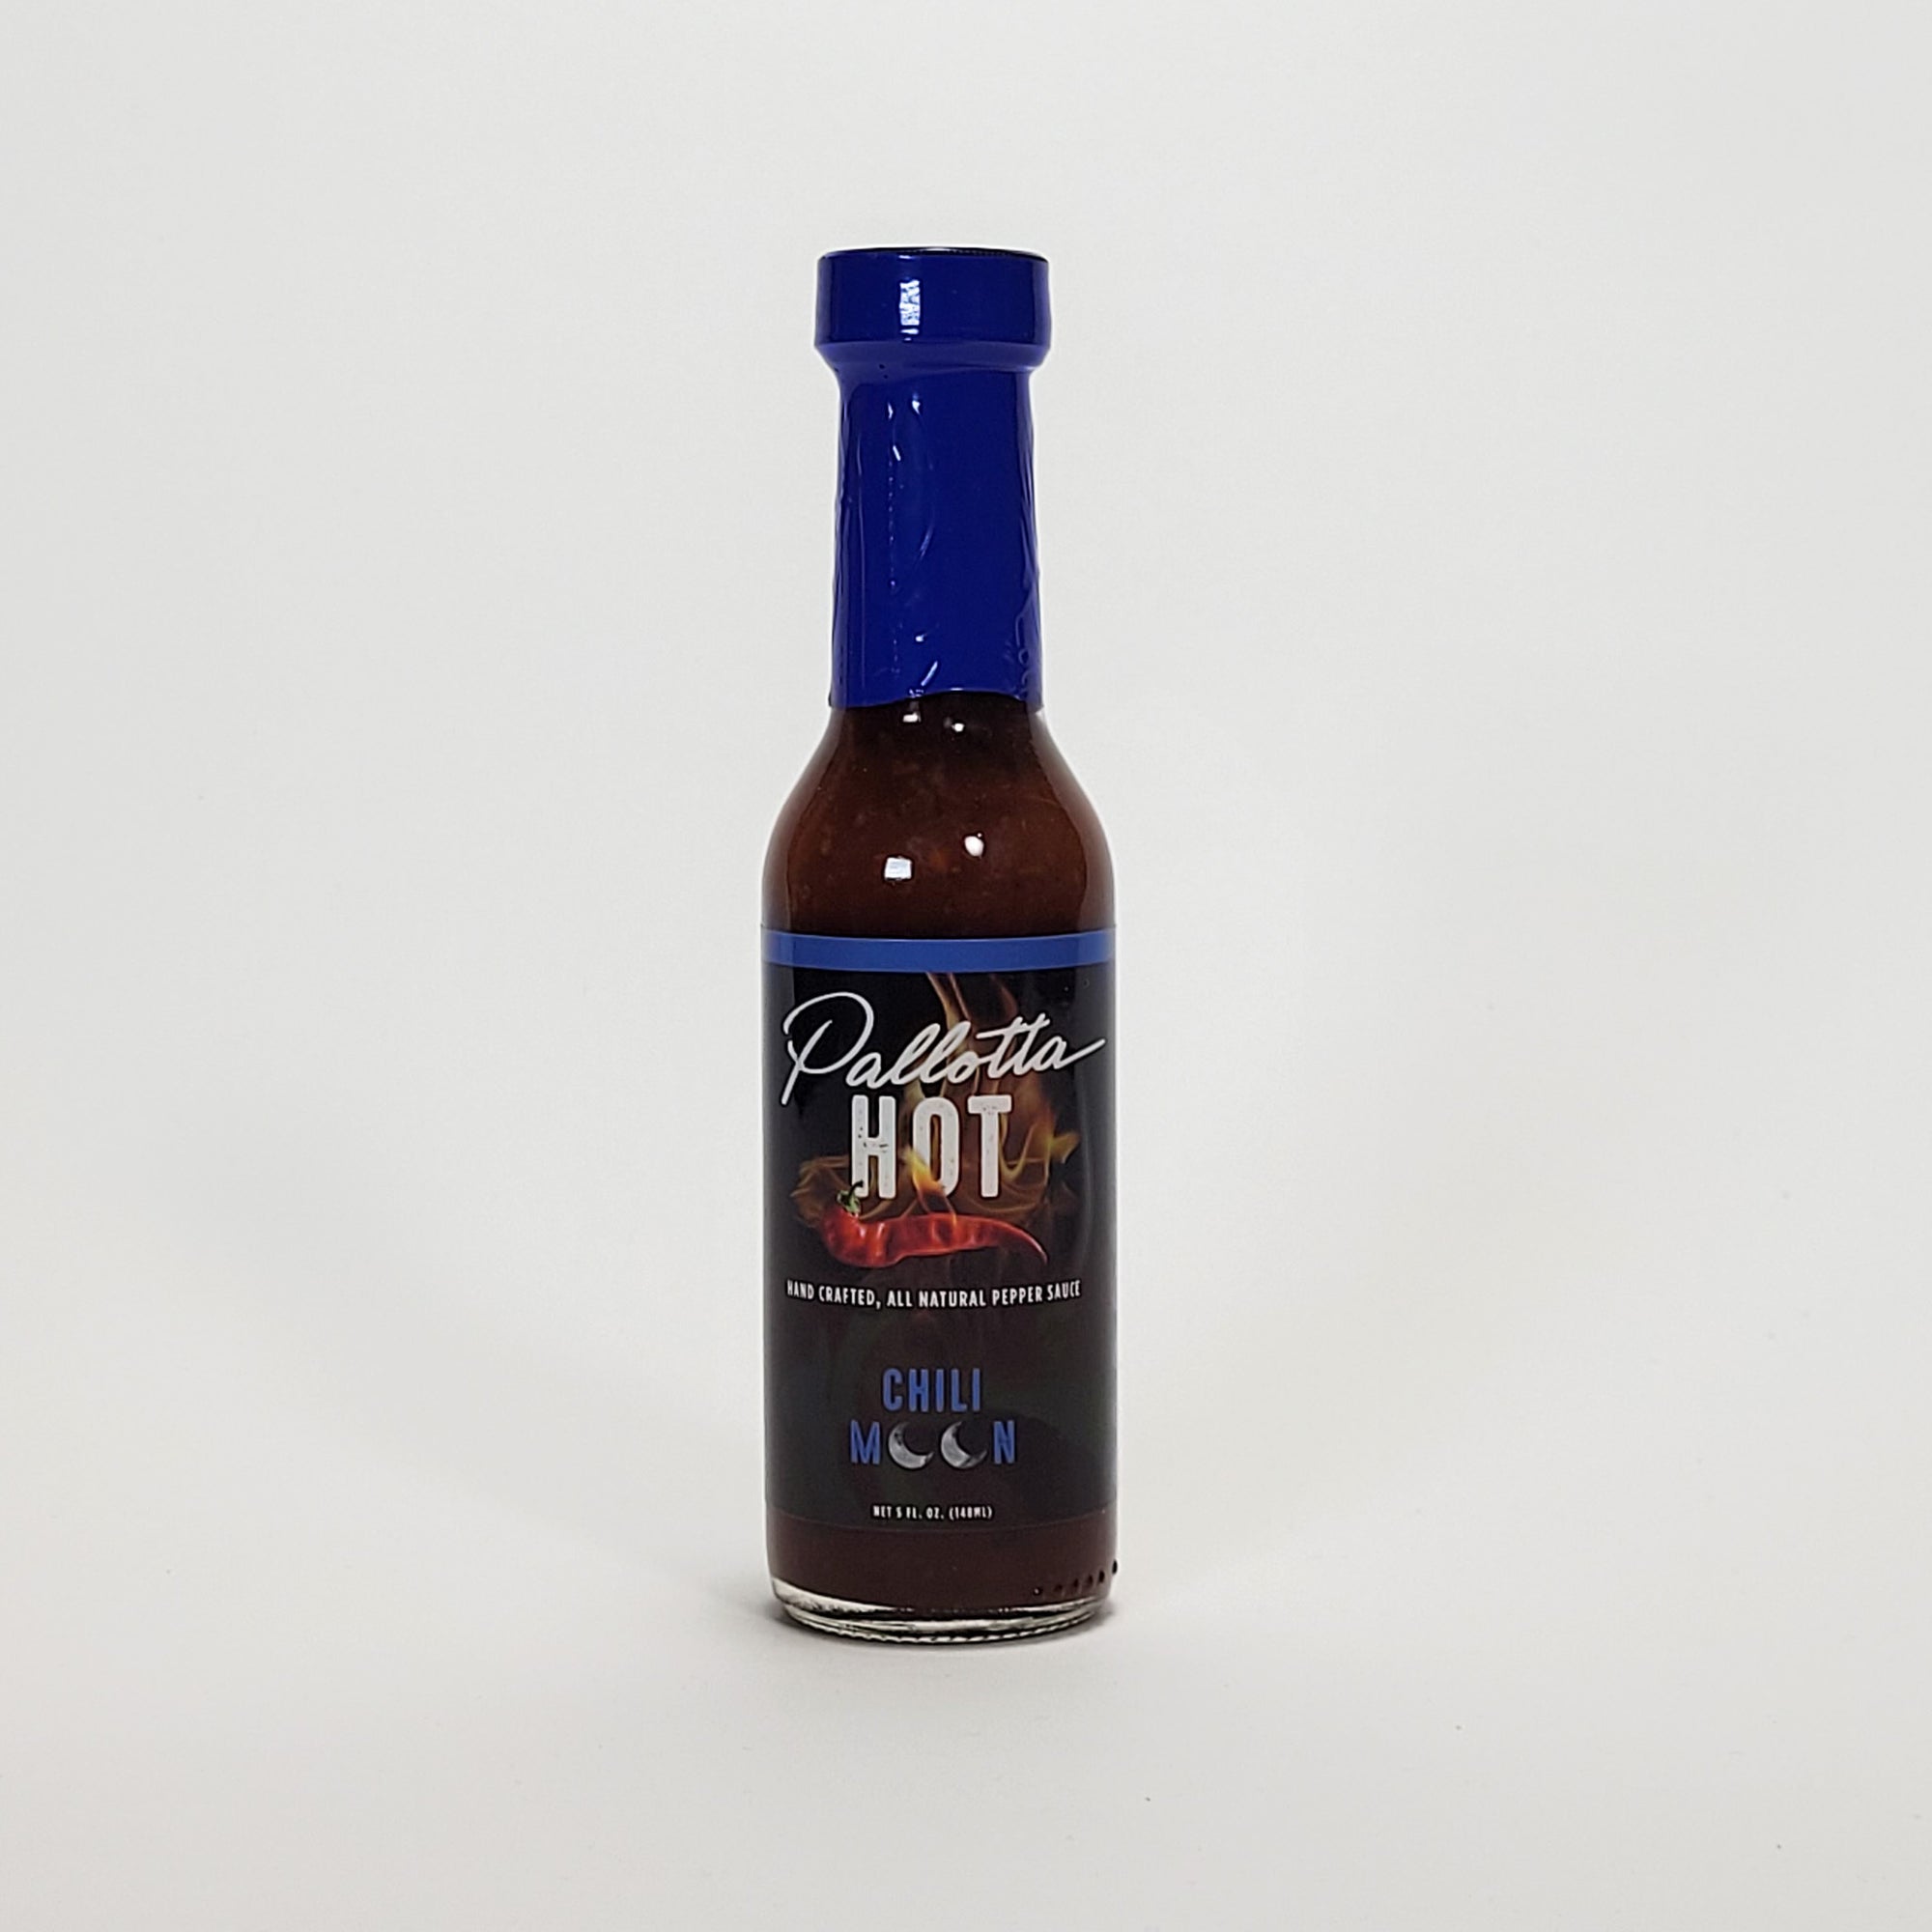 Pallotta Hot Chili Moon hot sauce